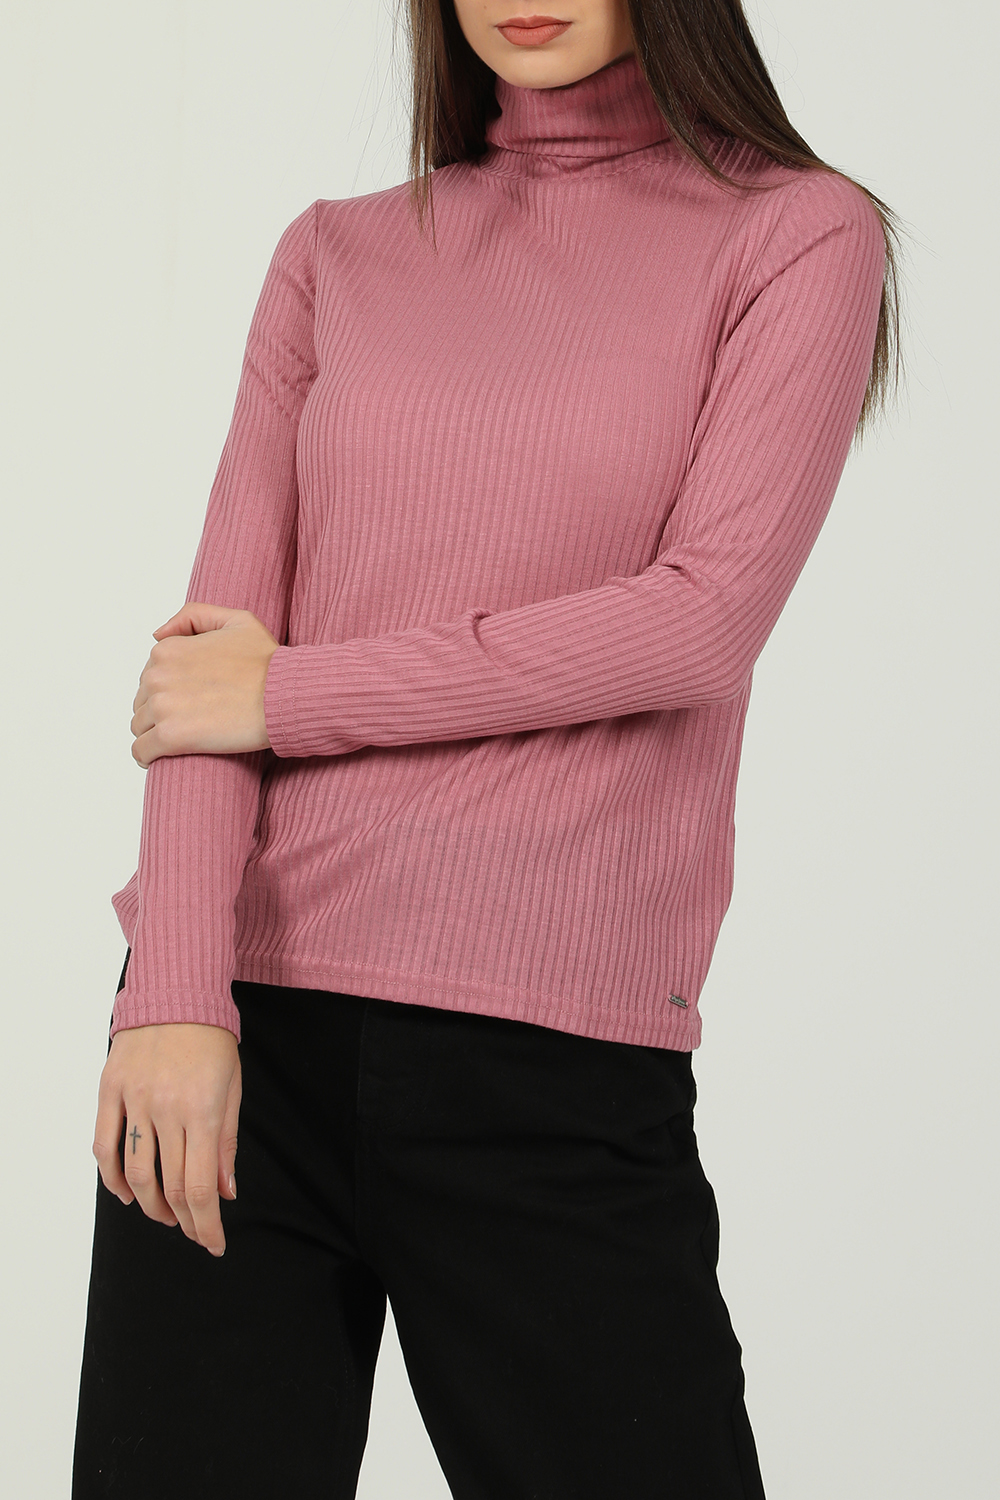 PEPE JEANS – Γυναικεια μακρυμανικη μπλουζα PEPE JEANS DEBORAH ροζ